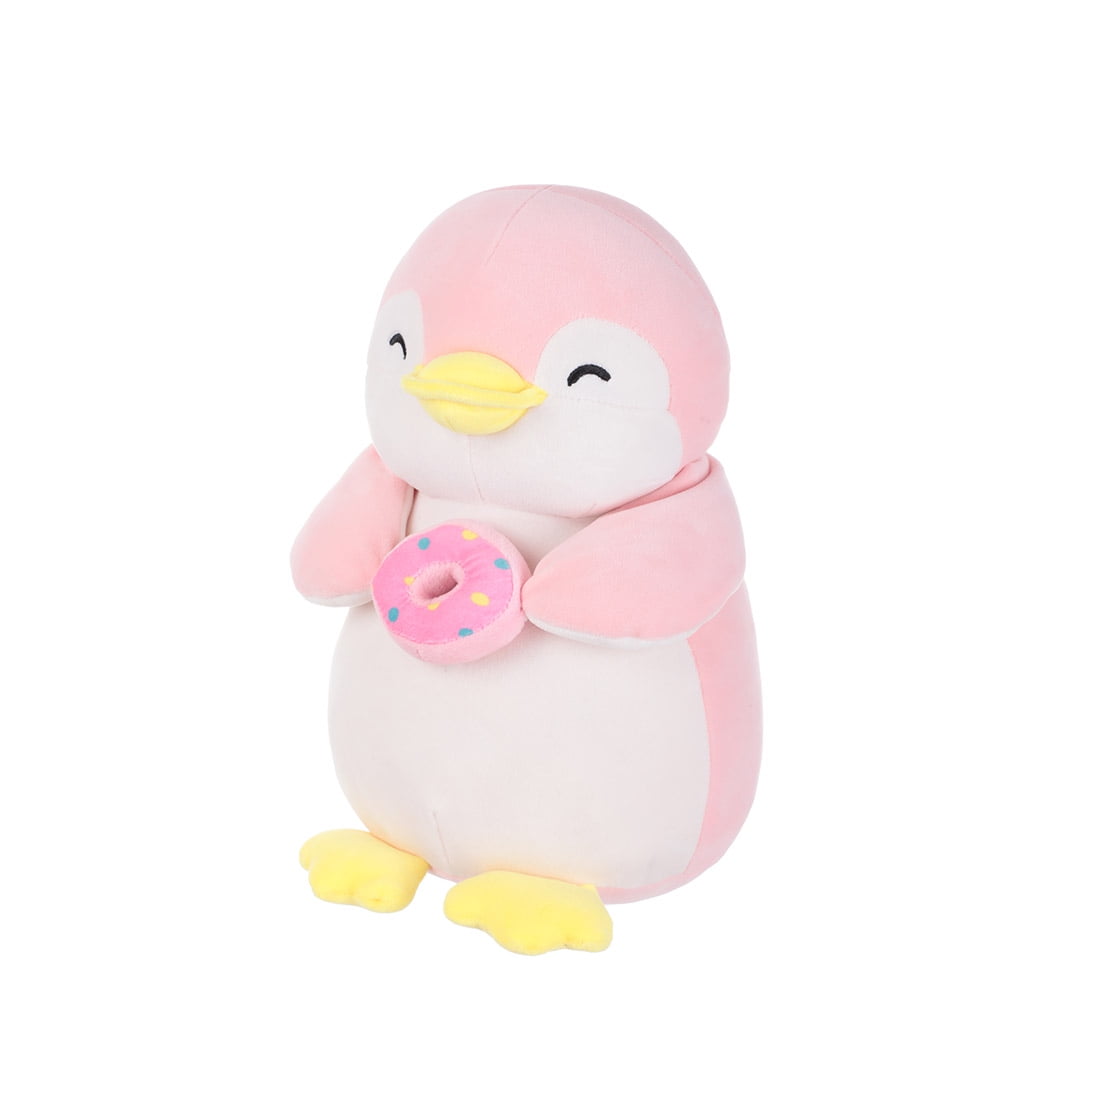  MINISO  Penguin Plush  Toy Cute Stuffed Animal Doll Gift 